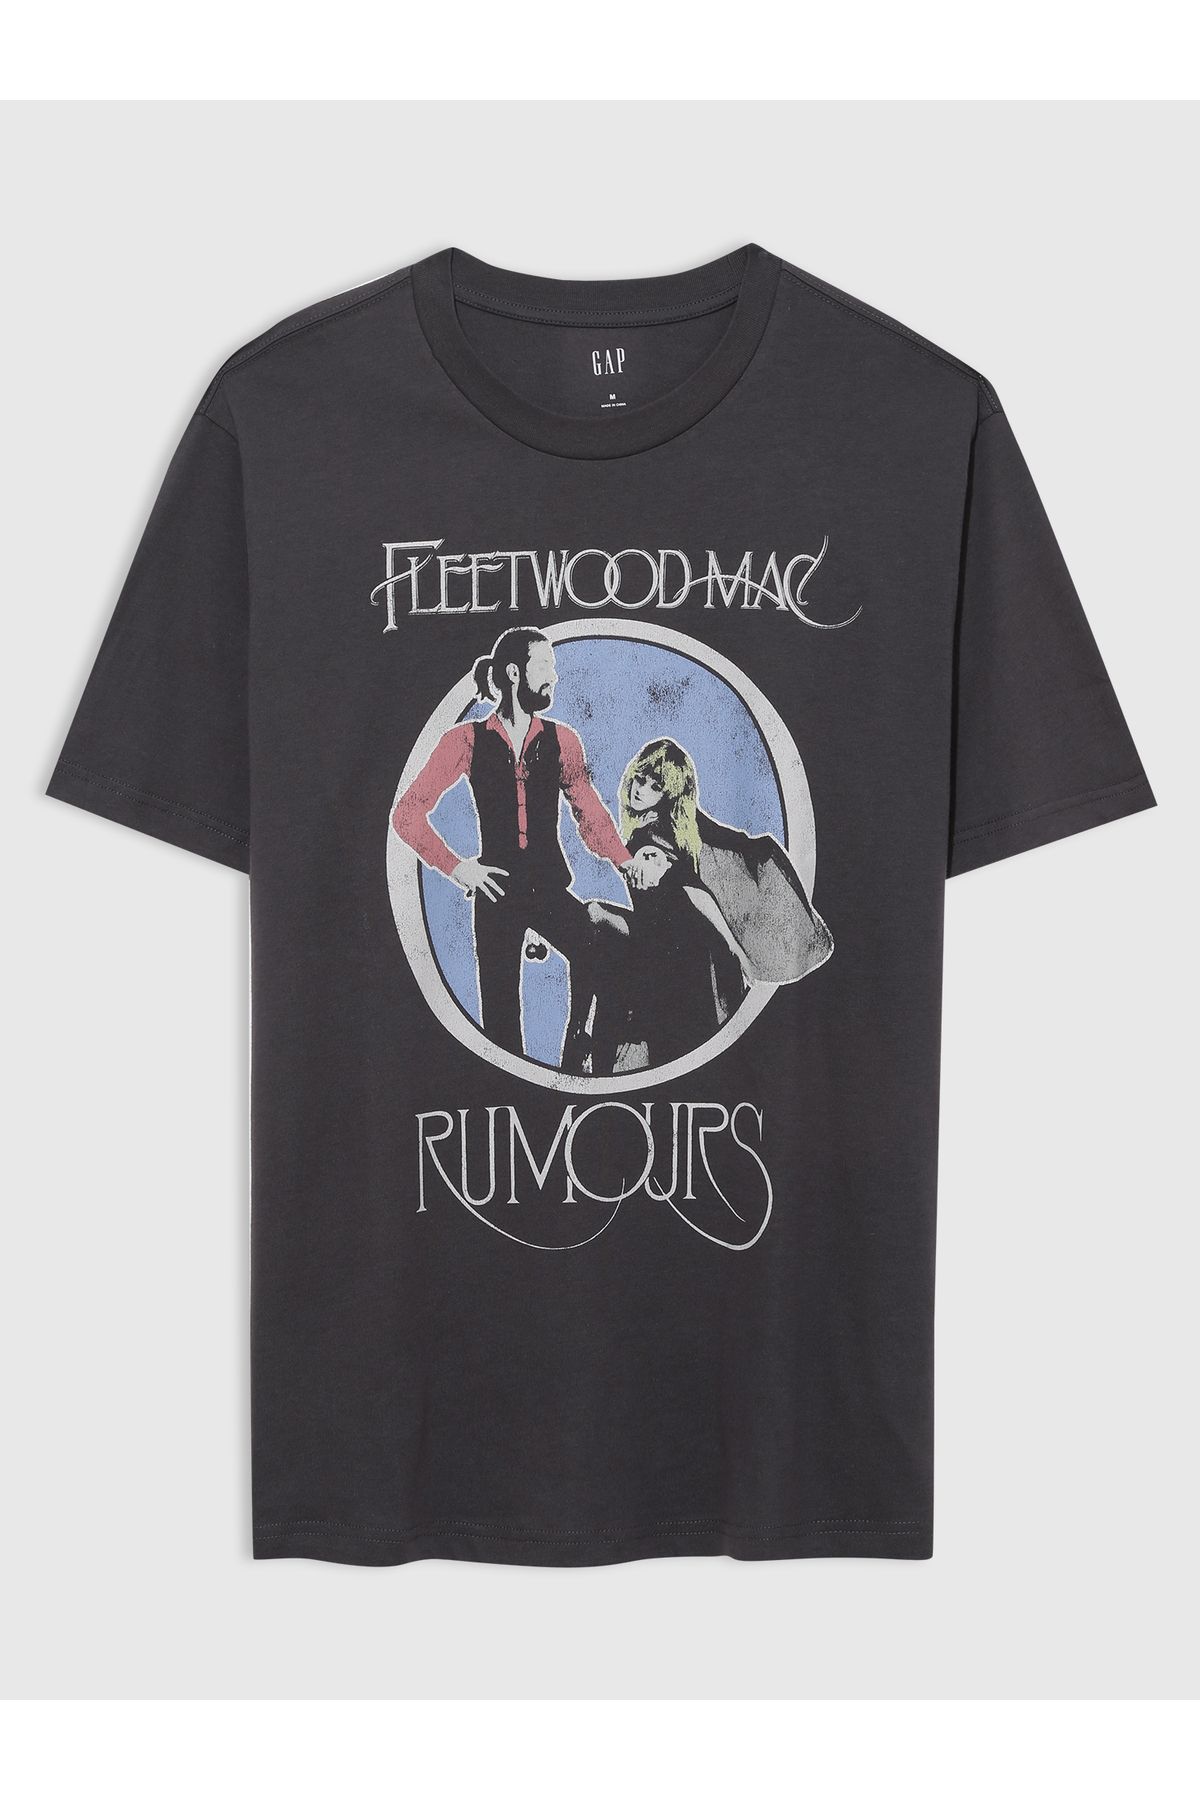 GAP Erkek Koyu Gri Fleetwood Mac Grafikli T-Shirt